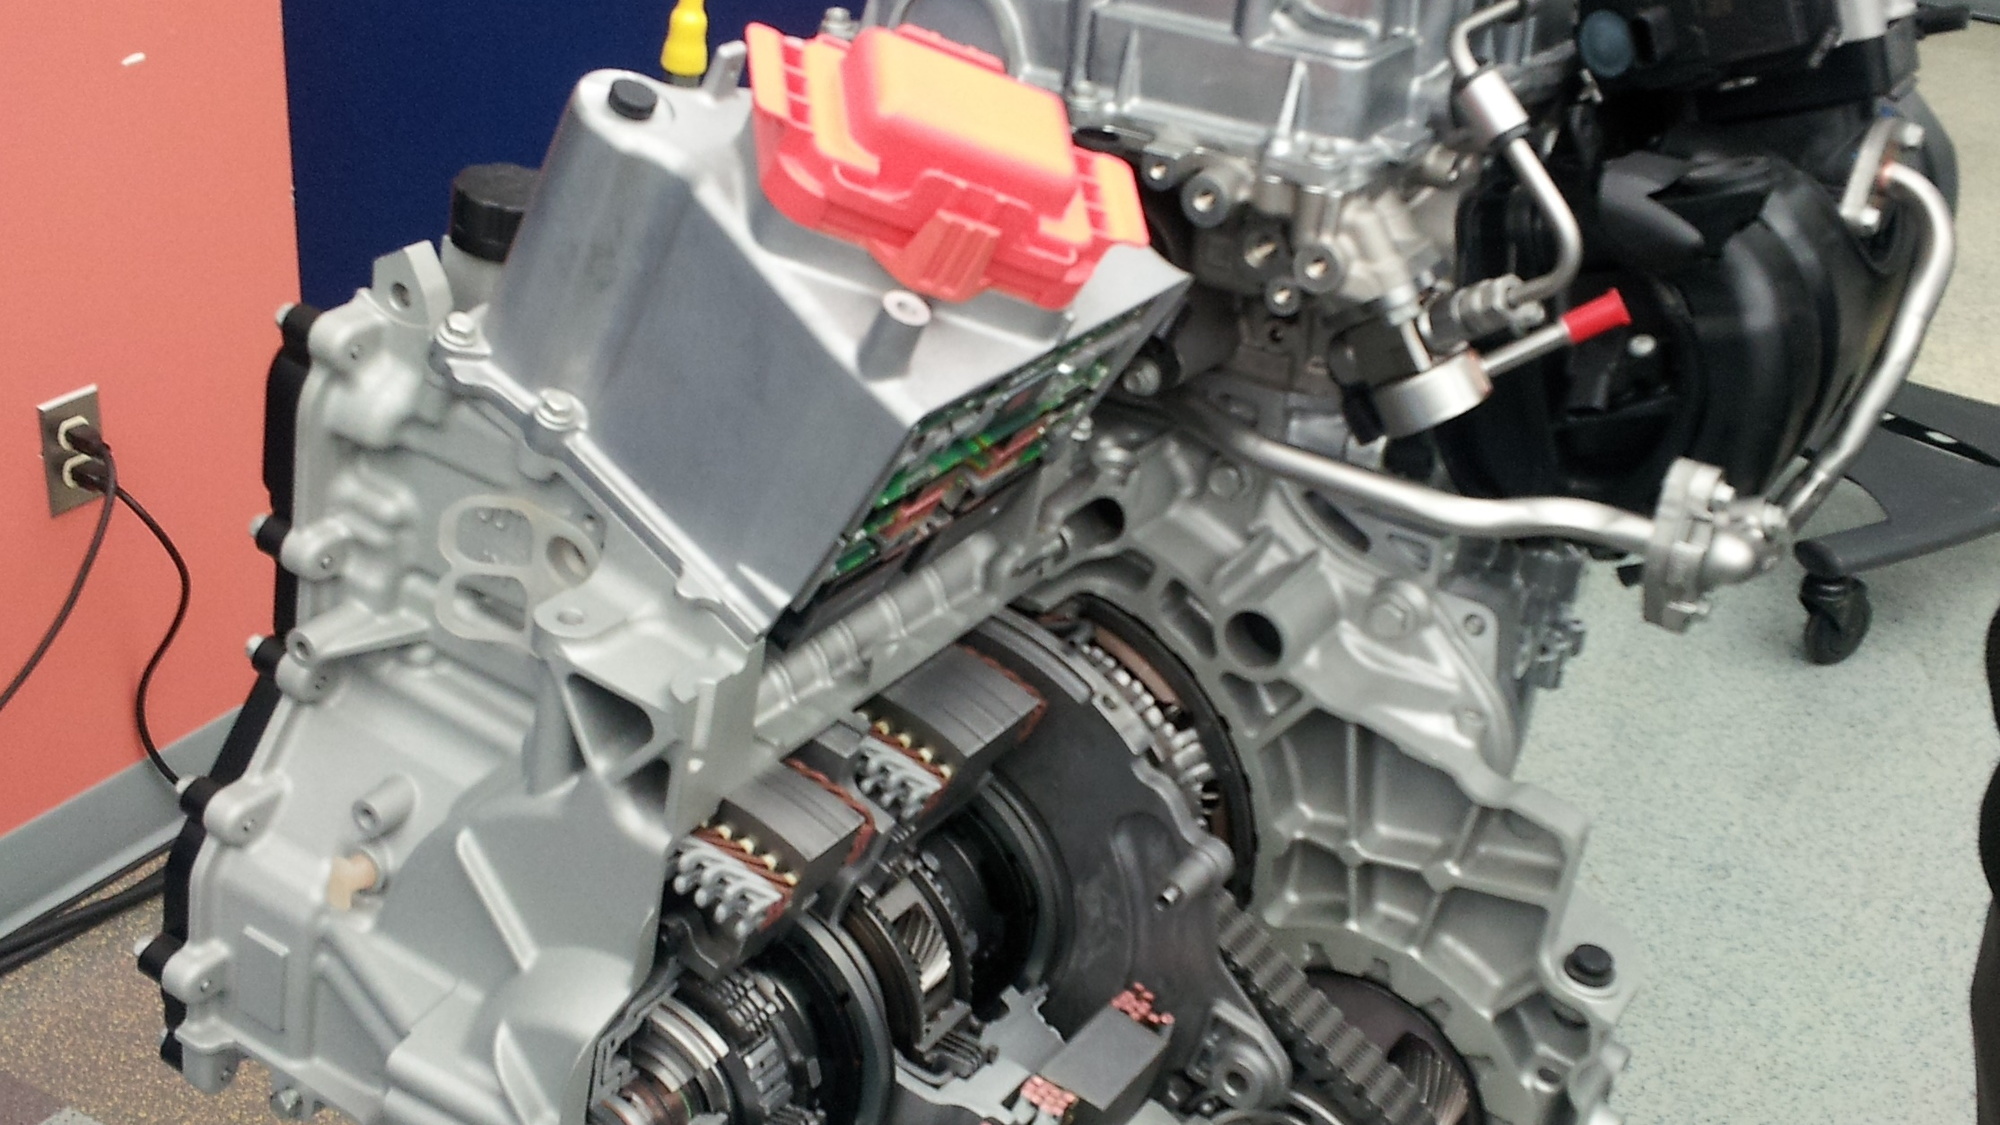 2016 Chevrolet Volt powertrain detail - motor and power electronics unit advance briefing, Oct 2014